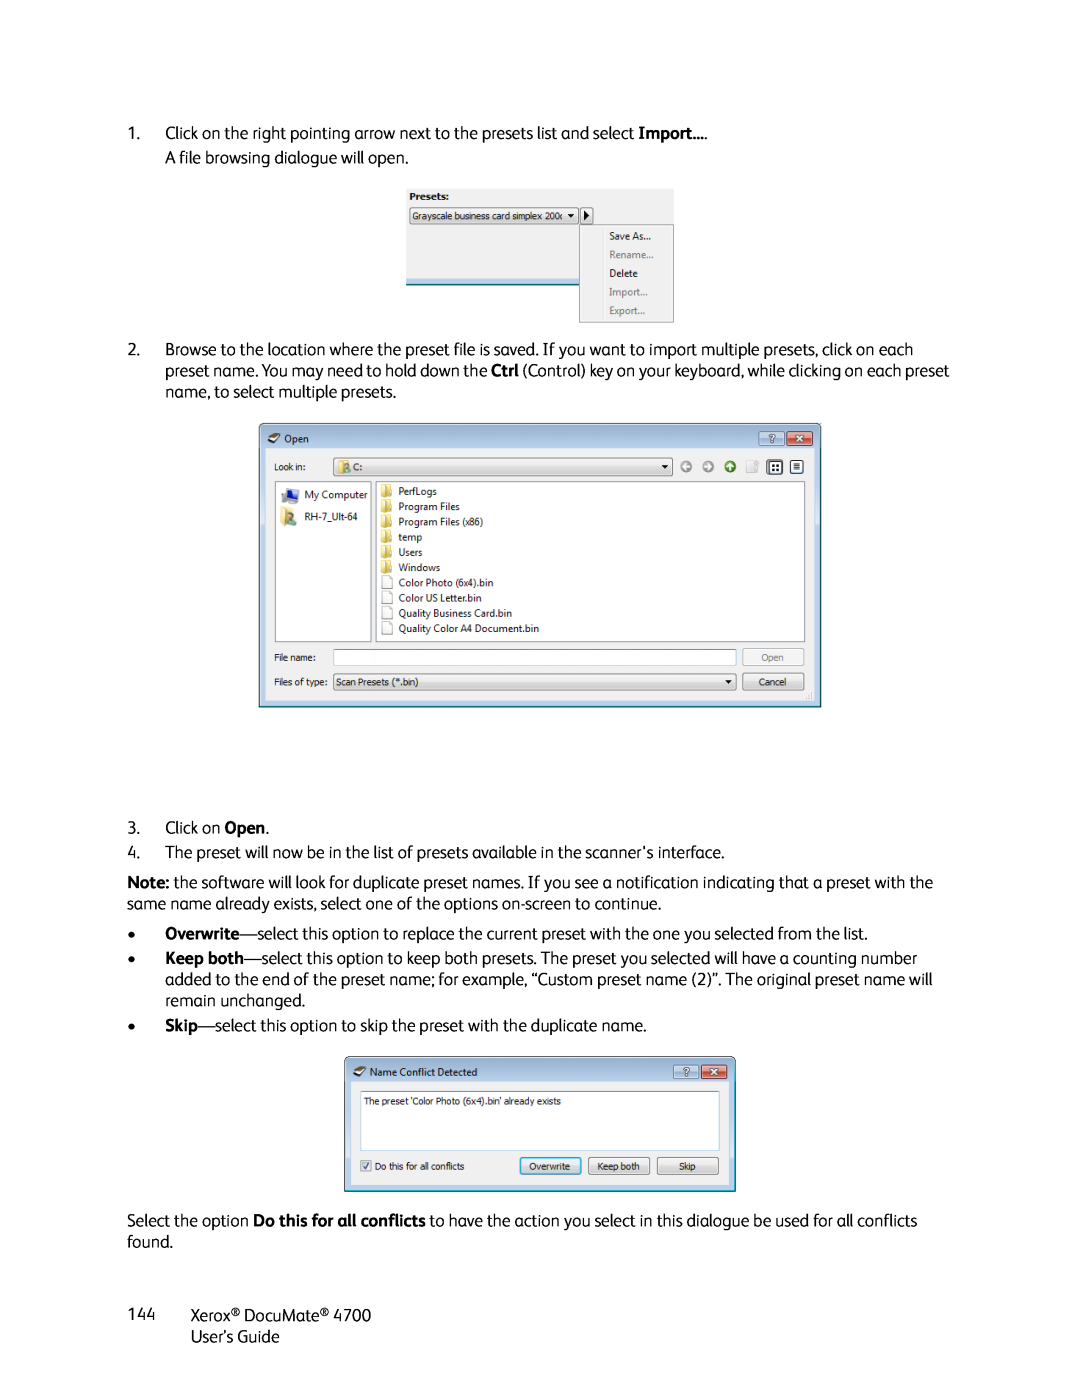 Xerox manual A file browsing dialogue will open, Click on Open, Xerox DocuMate 4700 User’s Guide 